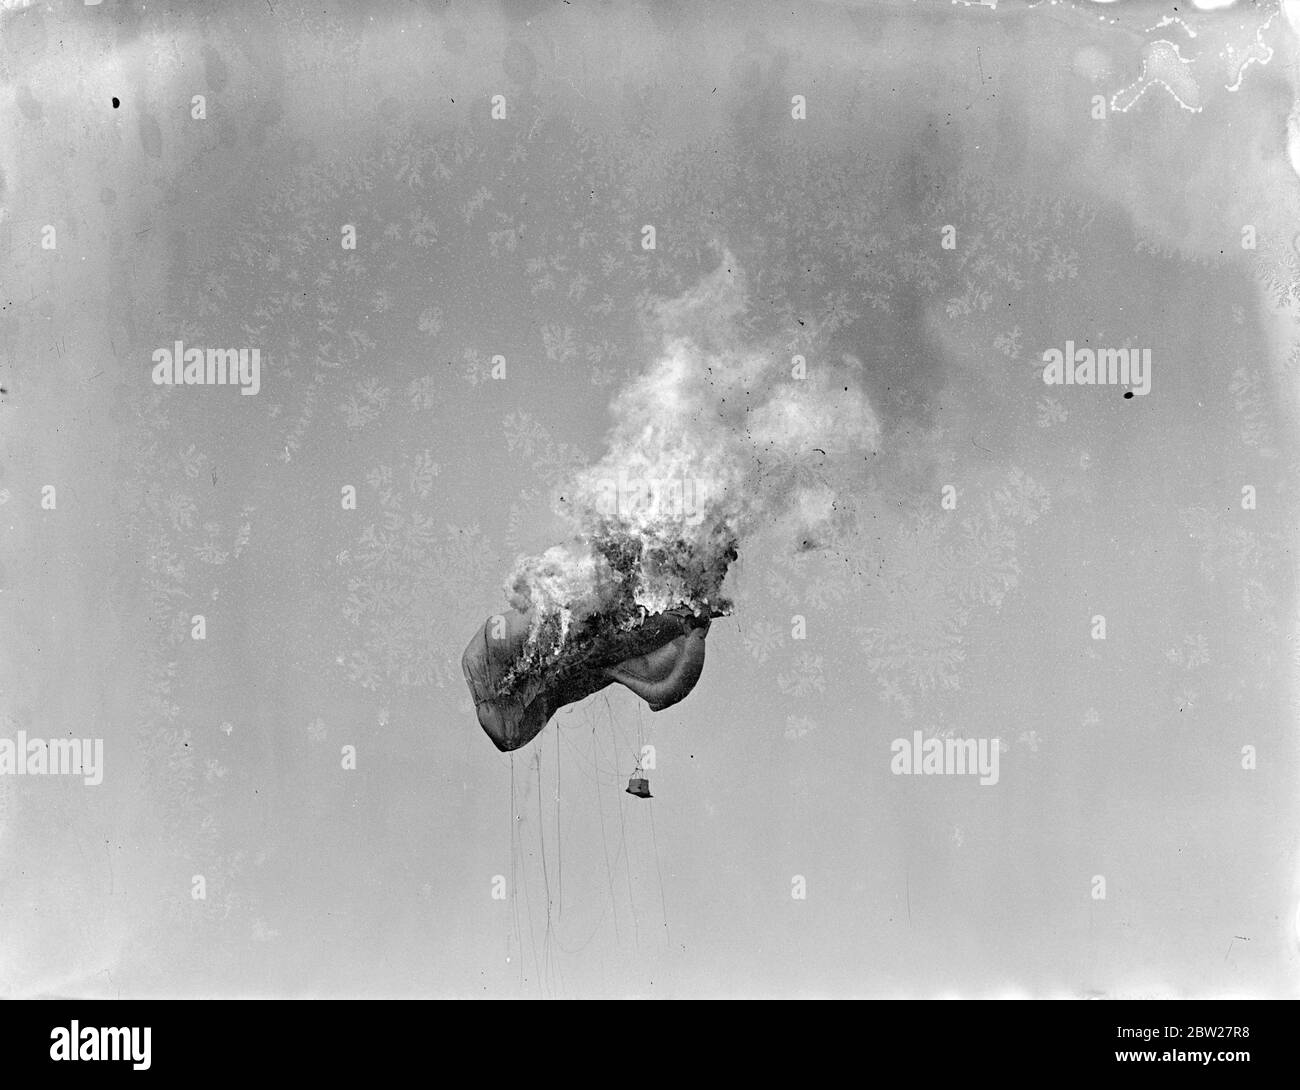 Kite balloons Black and White Stock Photos & Images - Alamy